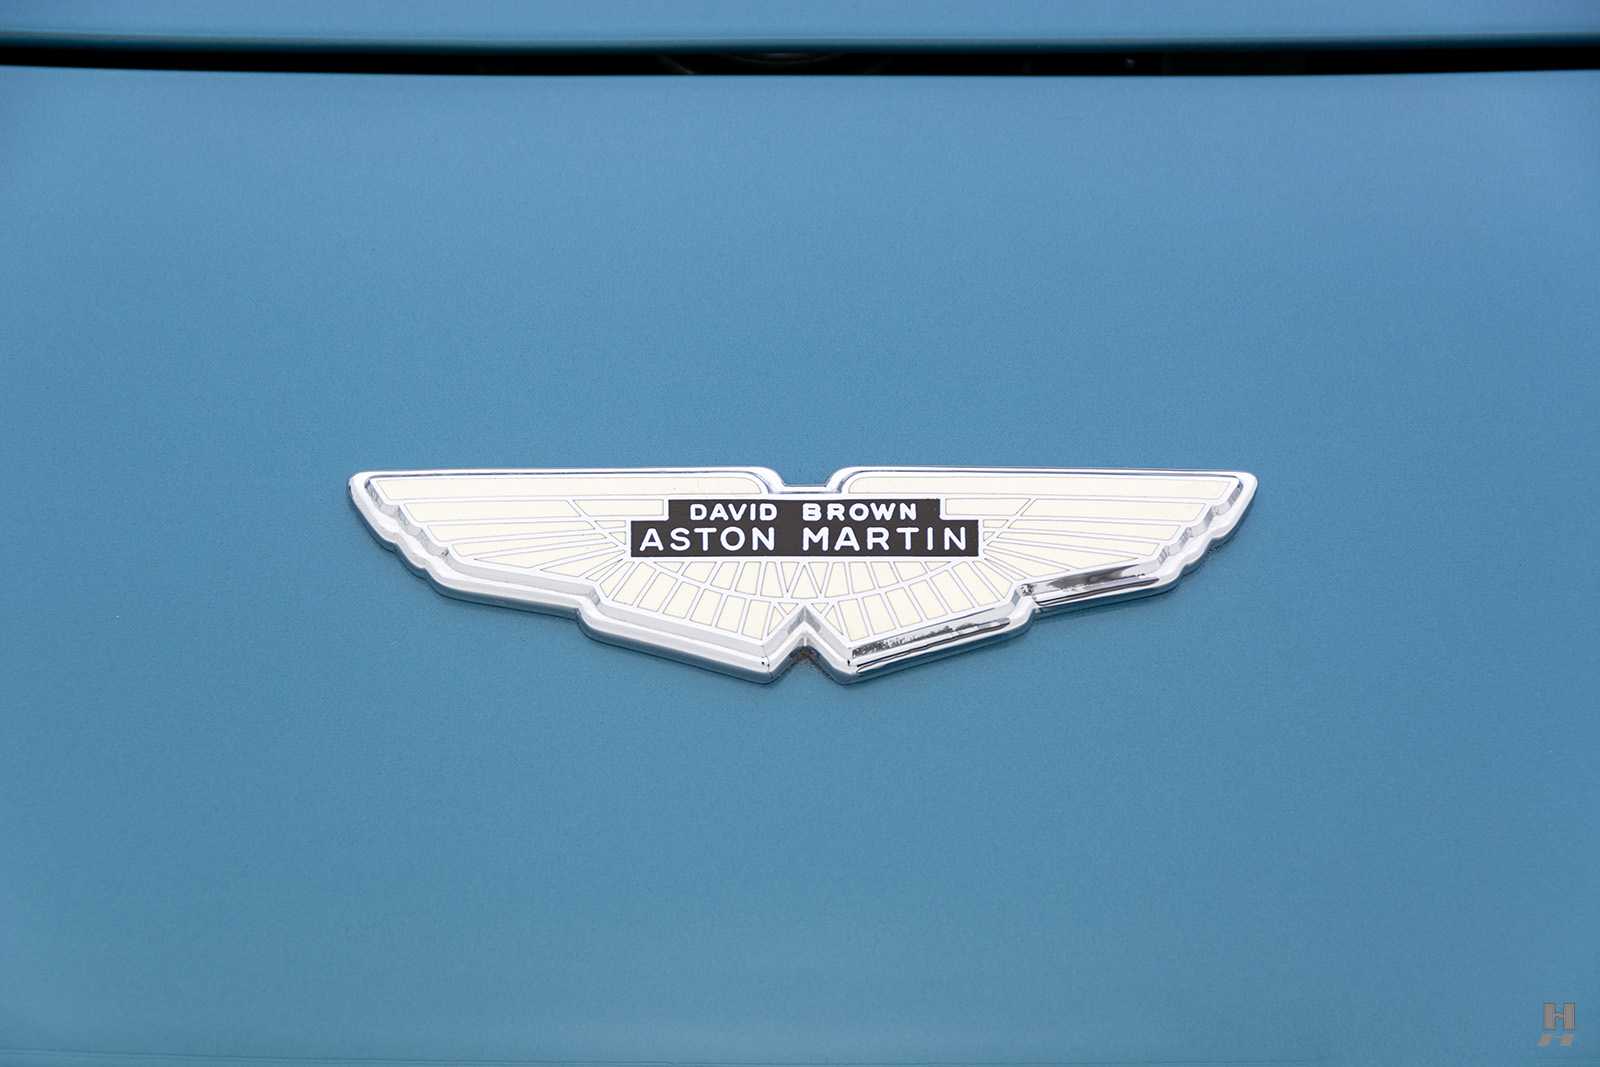 1961 aston martin db4 gt lightweight